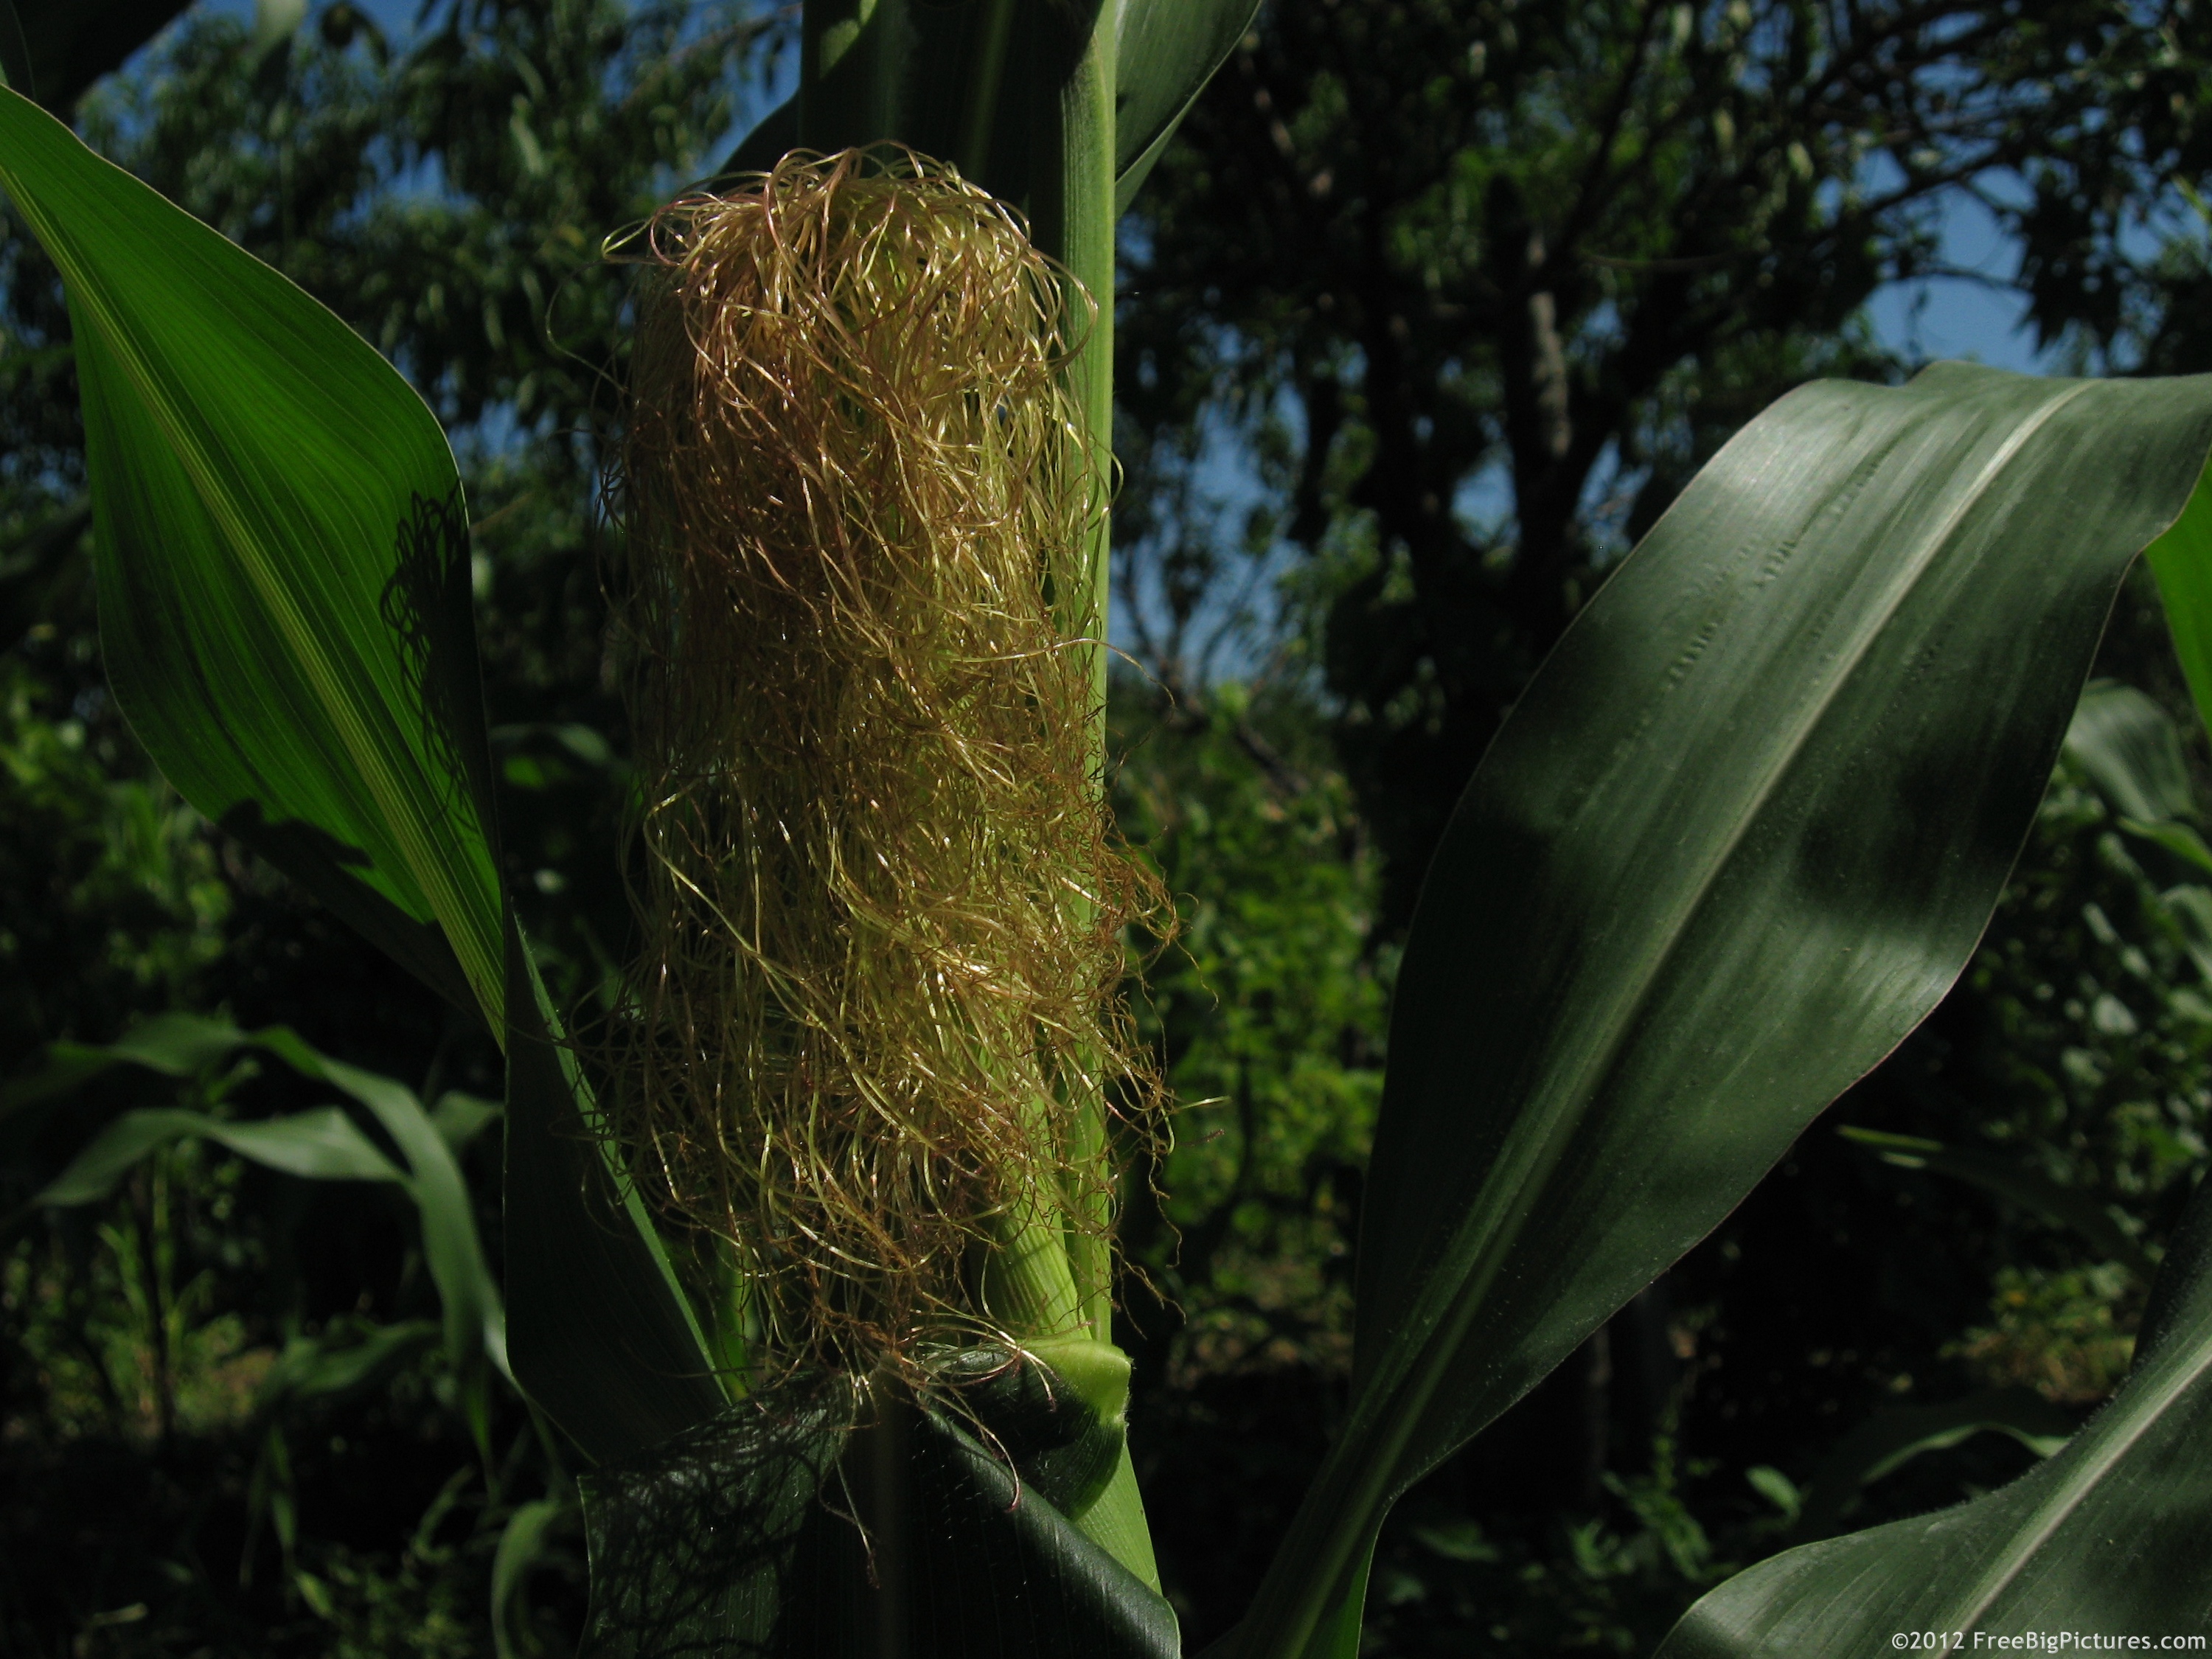 Corn silk has anti-inflammatory, diuretic, hypoglycemic effects